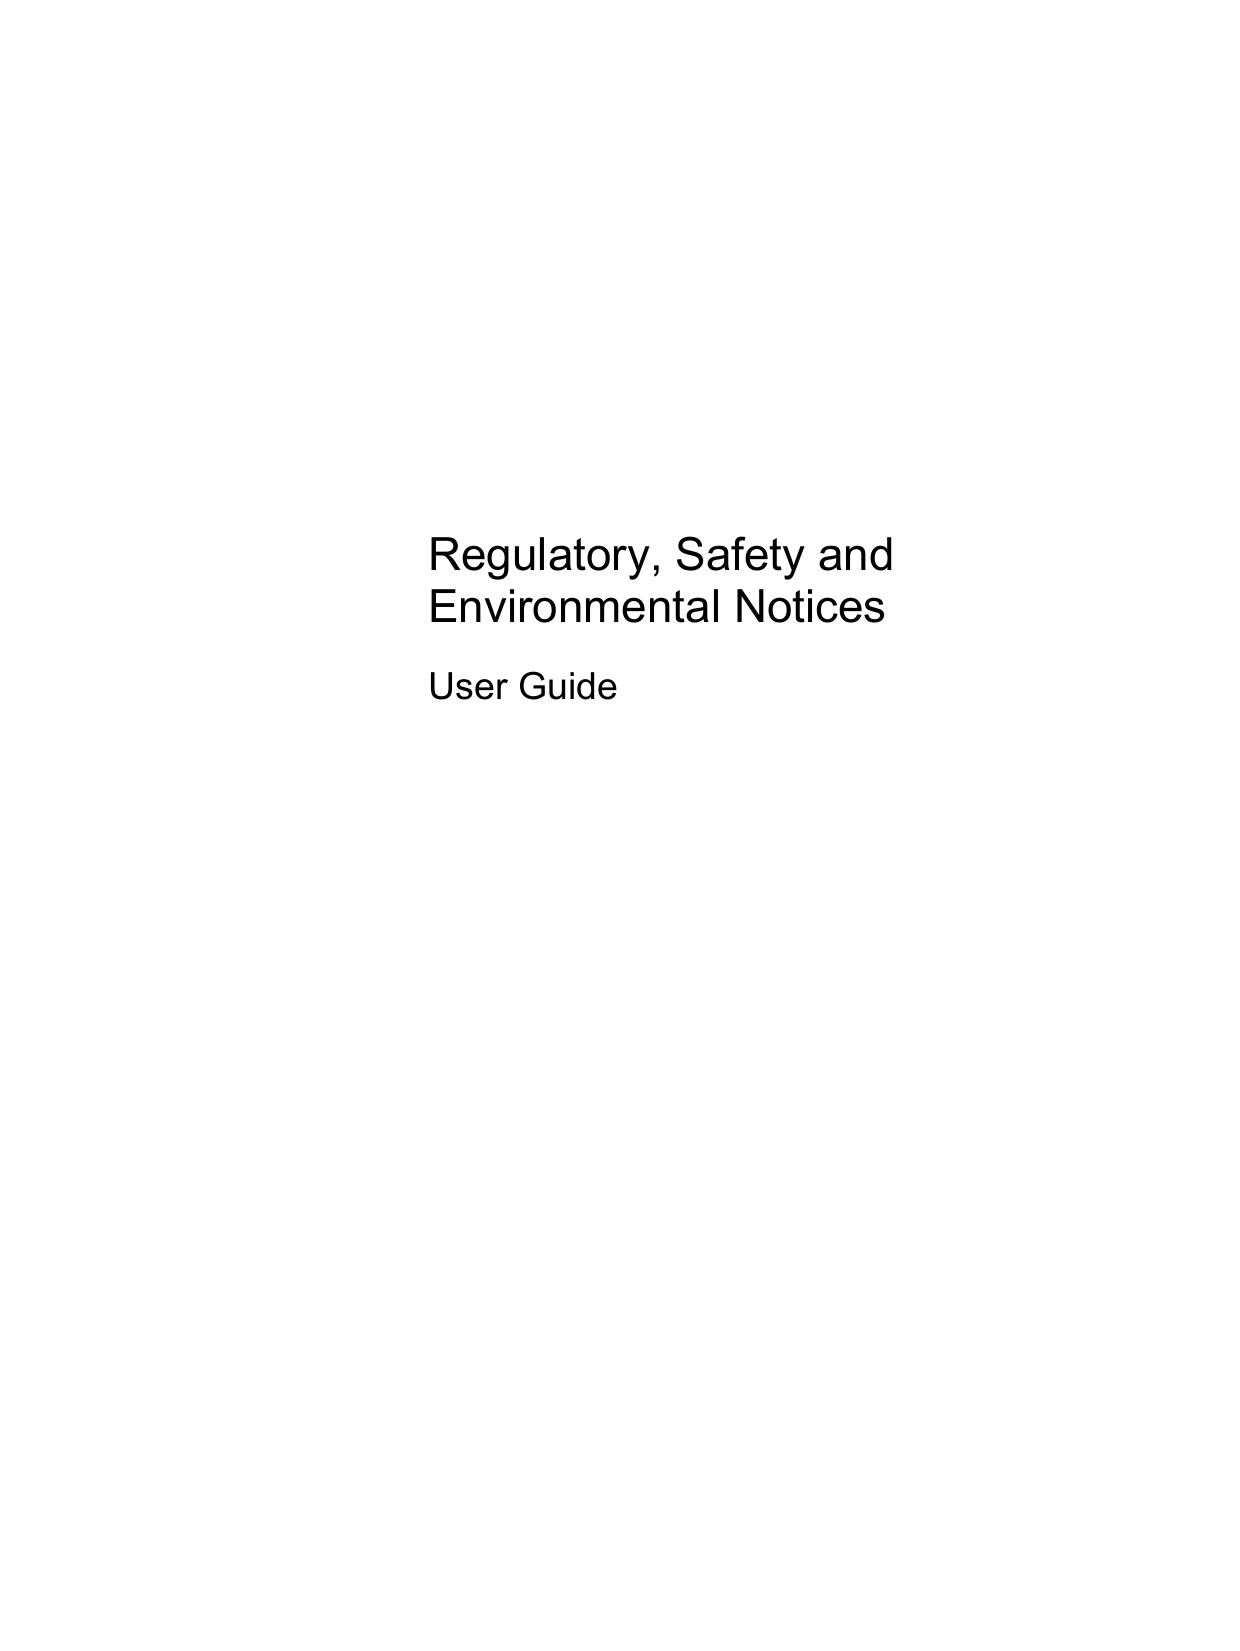 Regulatory, Safety andEnvironmental NoticesUser Guide